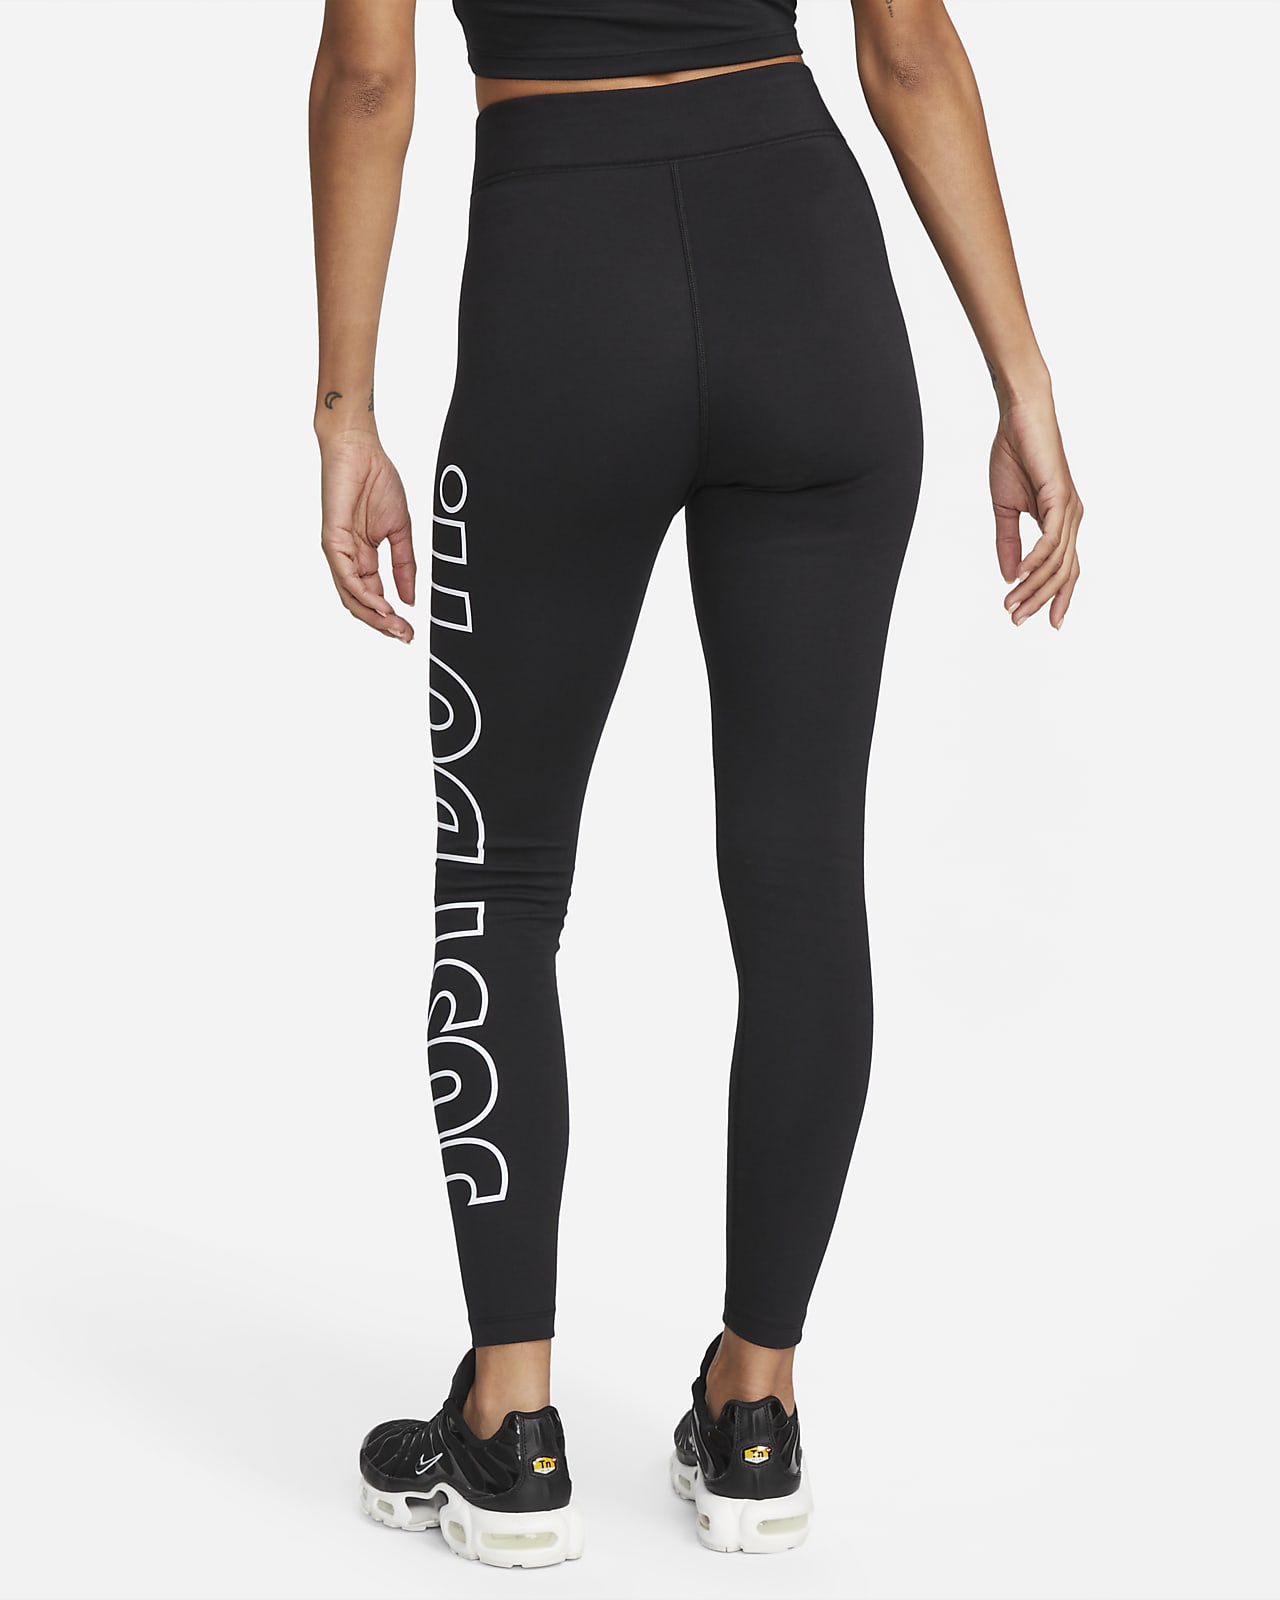 Nike Essential Logo Black Grey Mid Rise Leggings Women's Size Small -  beyond exchange